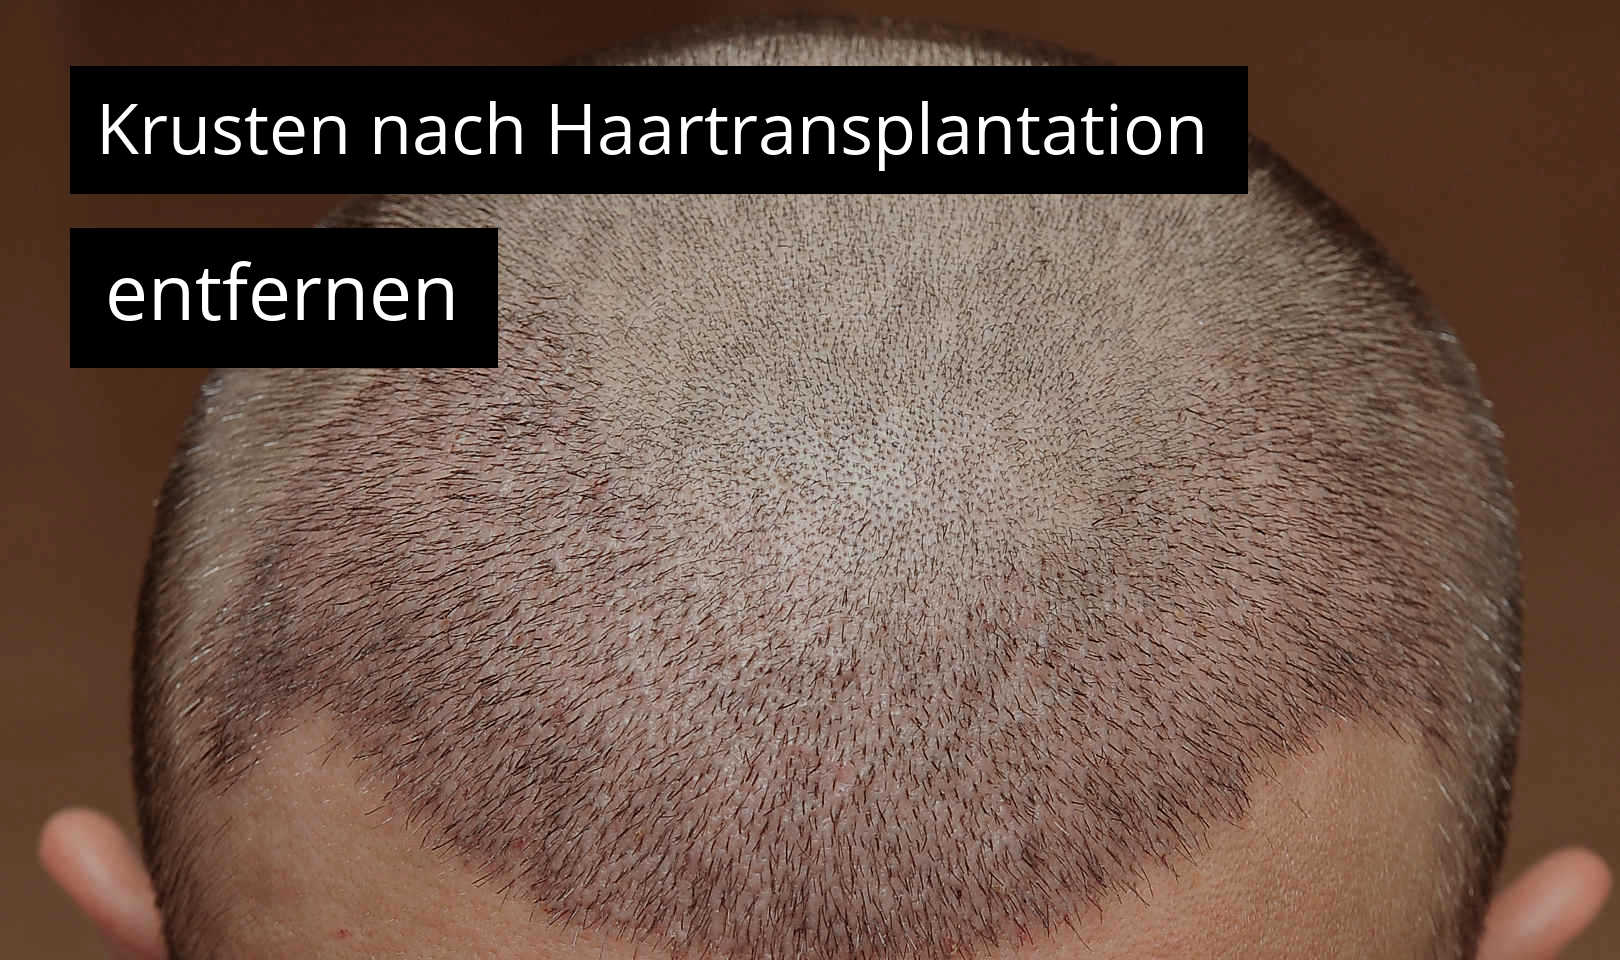 Krusten nach Haartransplantation entfernen